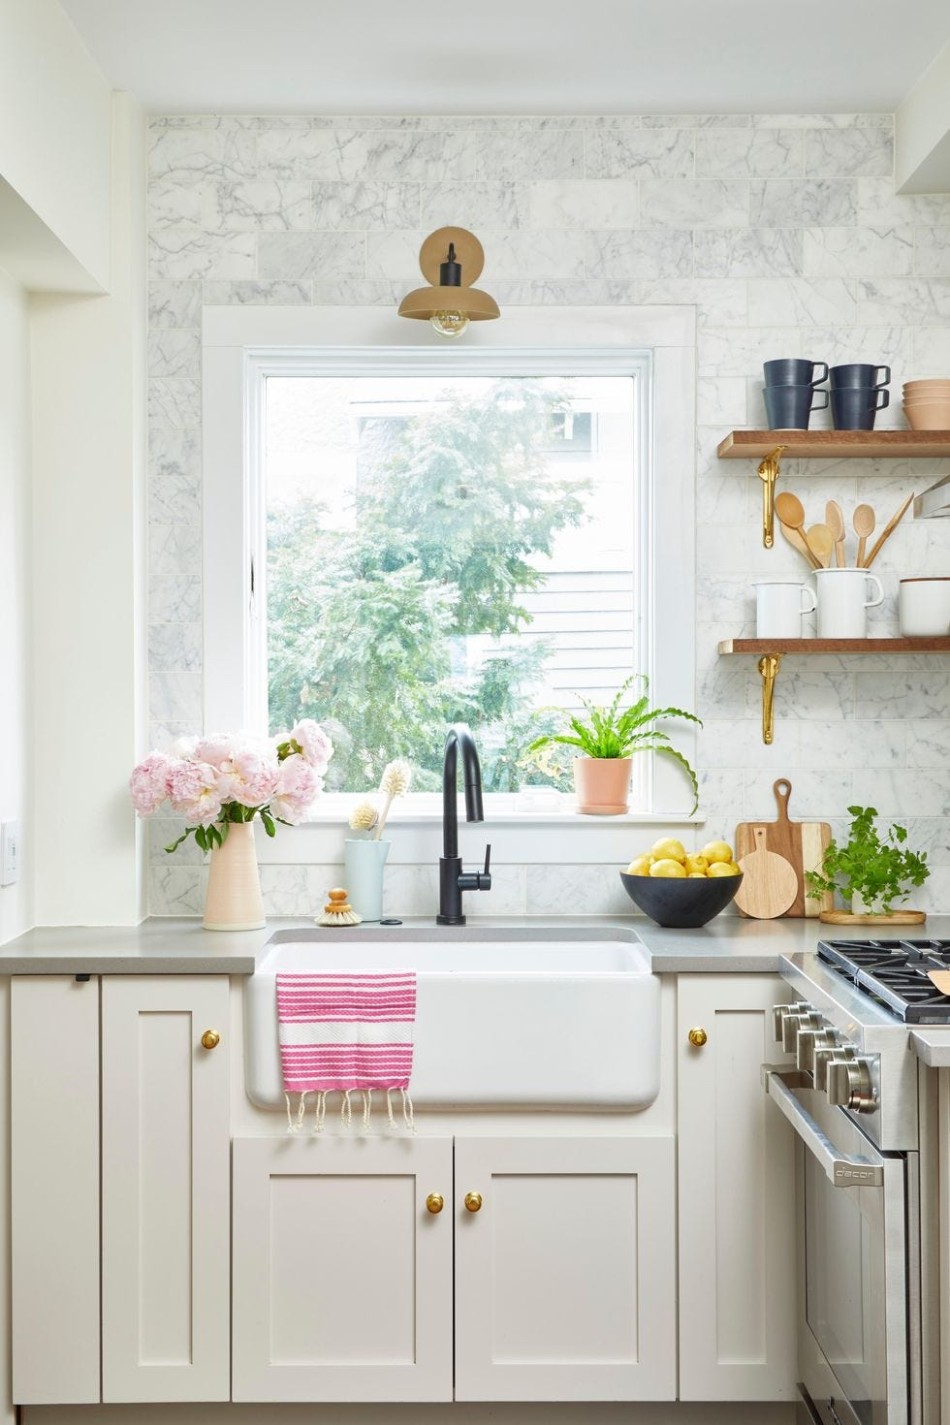 6 Best Small Kitchen Design Ideas - Tiny Kitchen Decorating - tiny kitchens ideas